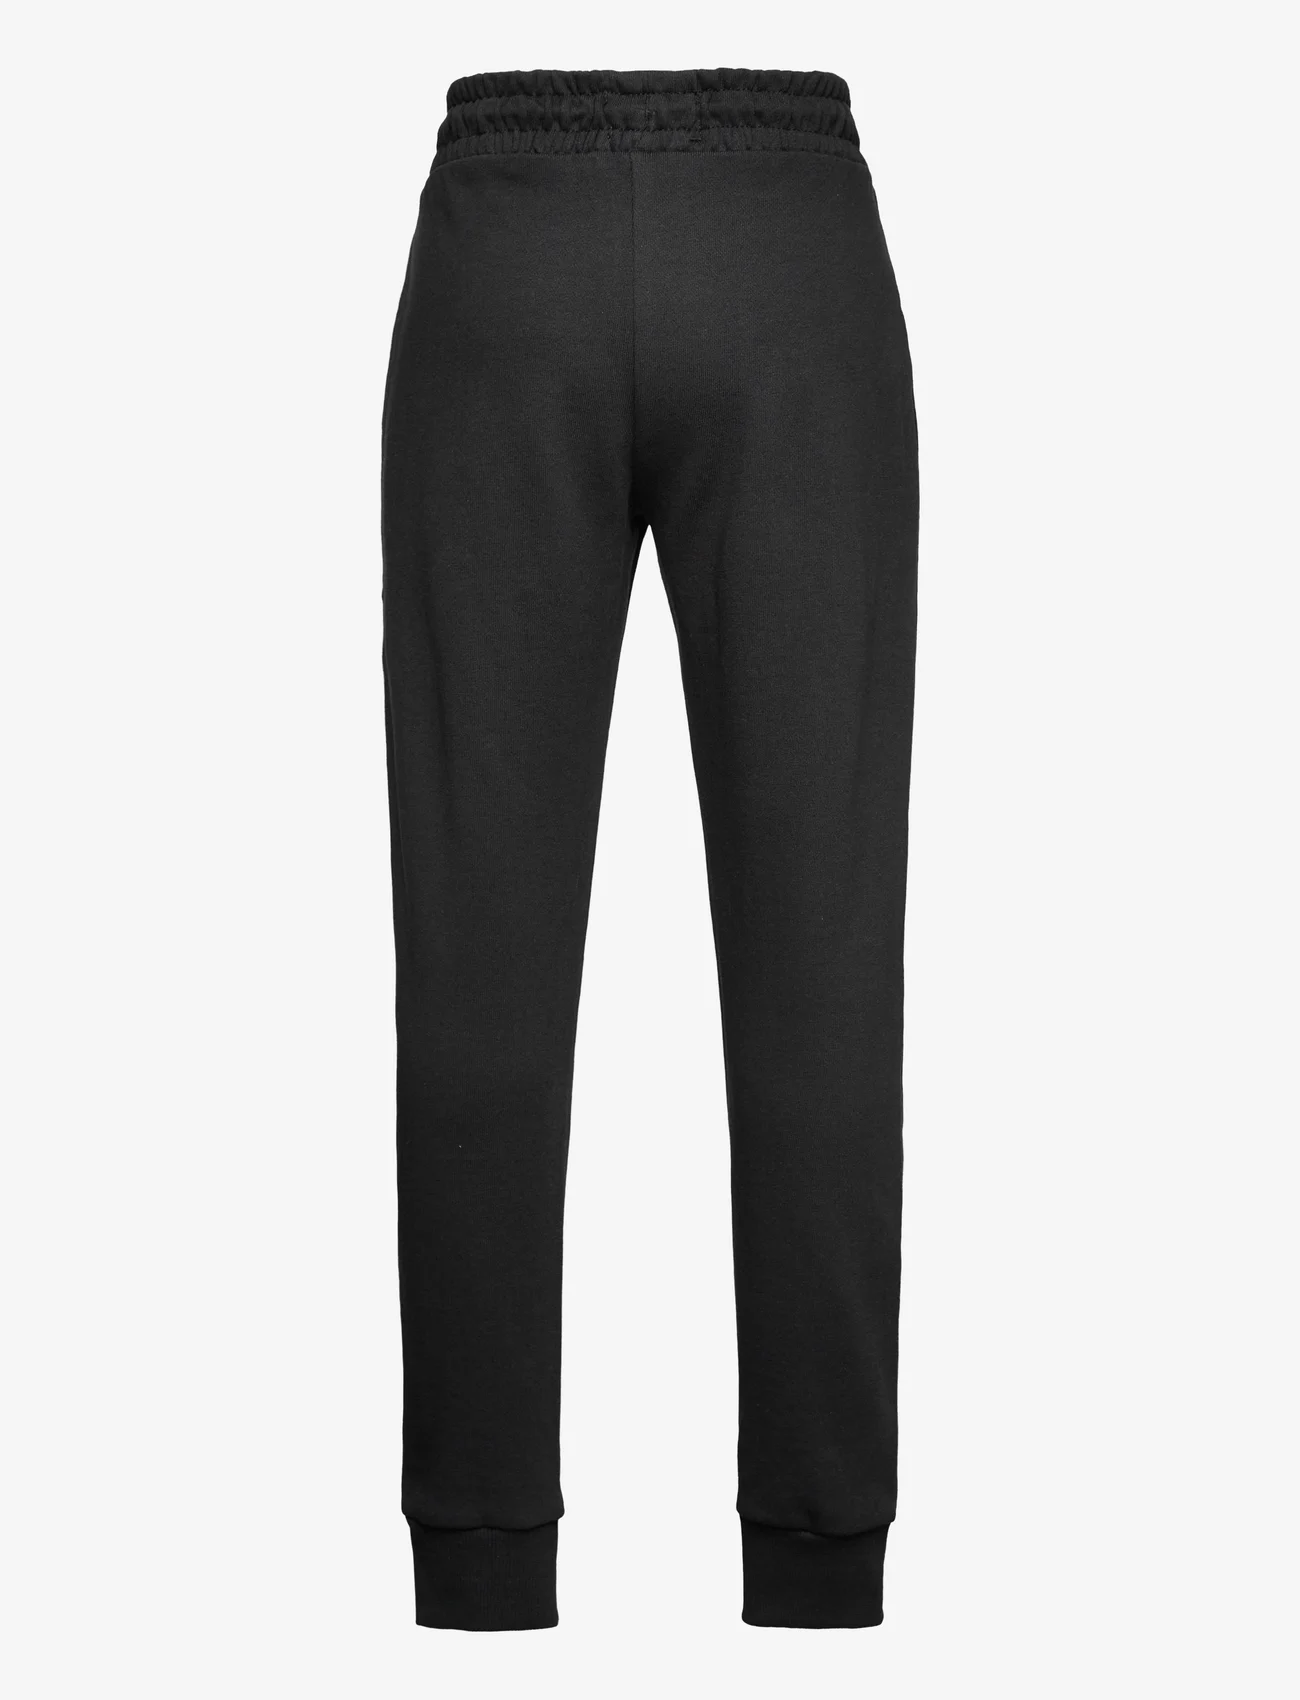 Mango - Cotton jogger-style trousers - black - 1